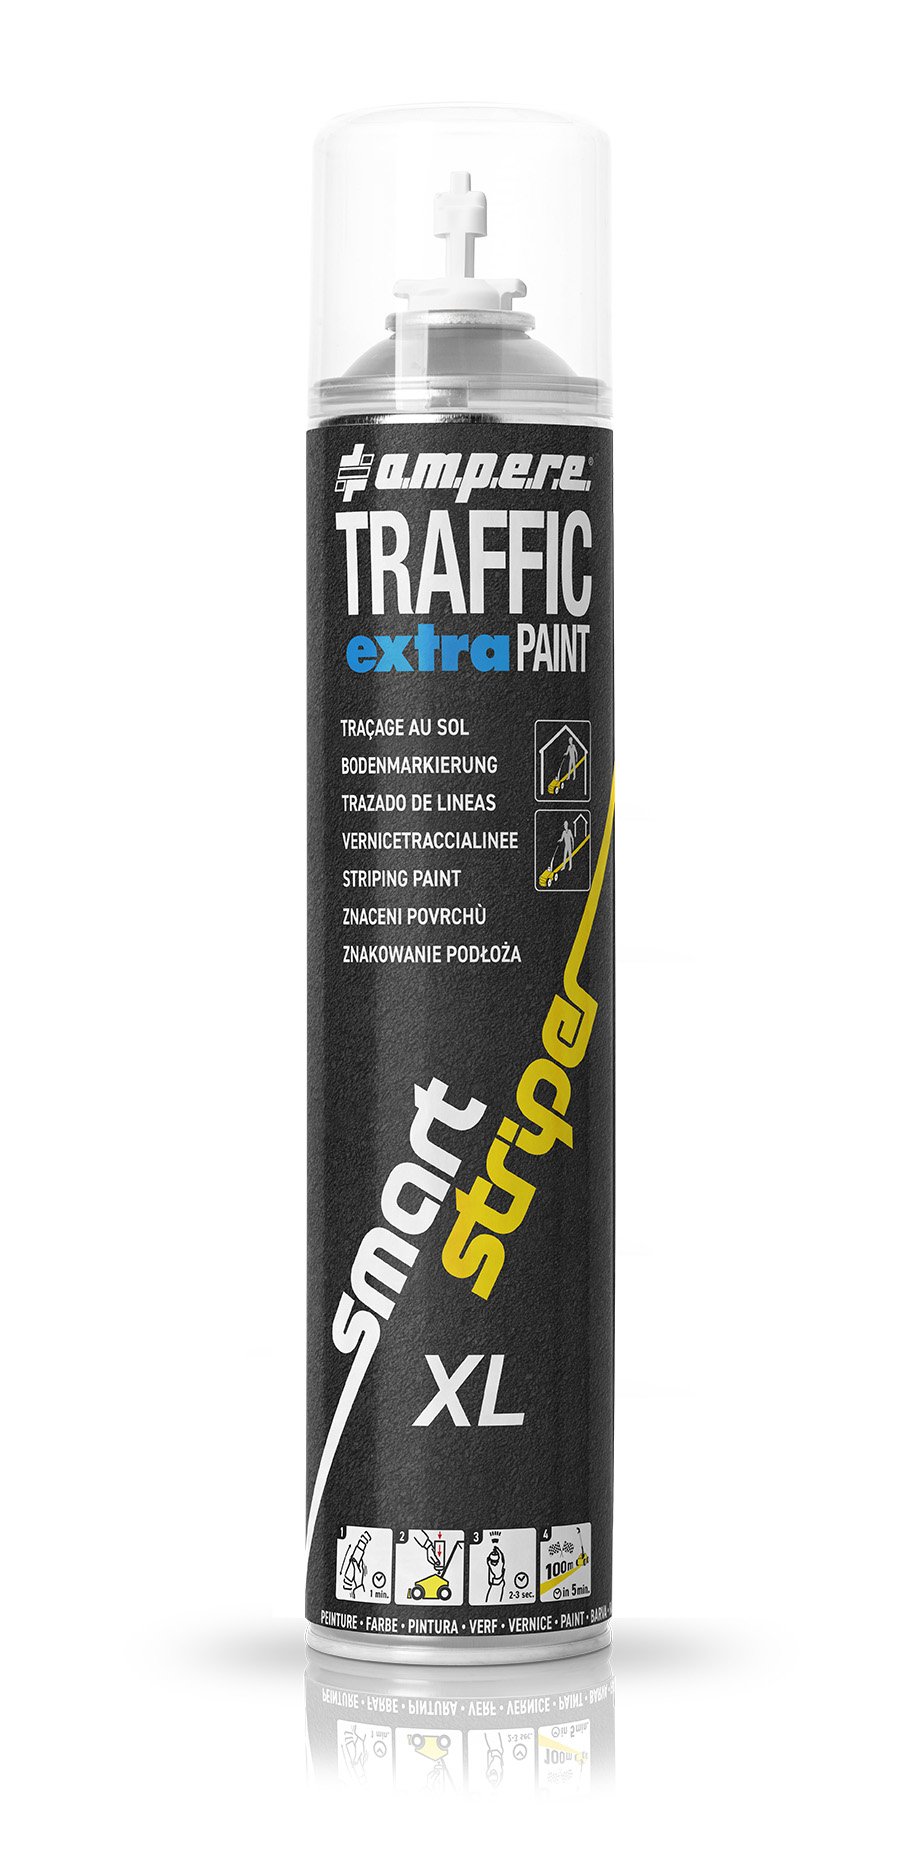 Bodenmarkier-Set mit 1 Karton 'Traffic Extra Paint XL' u. 1 'Smart Striper'